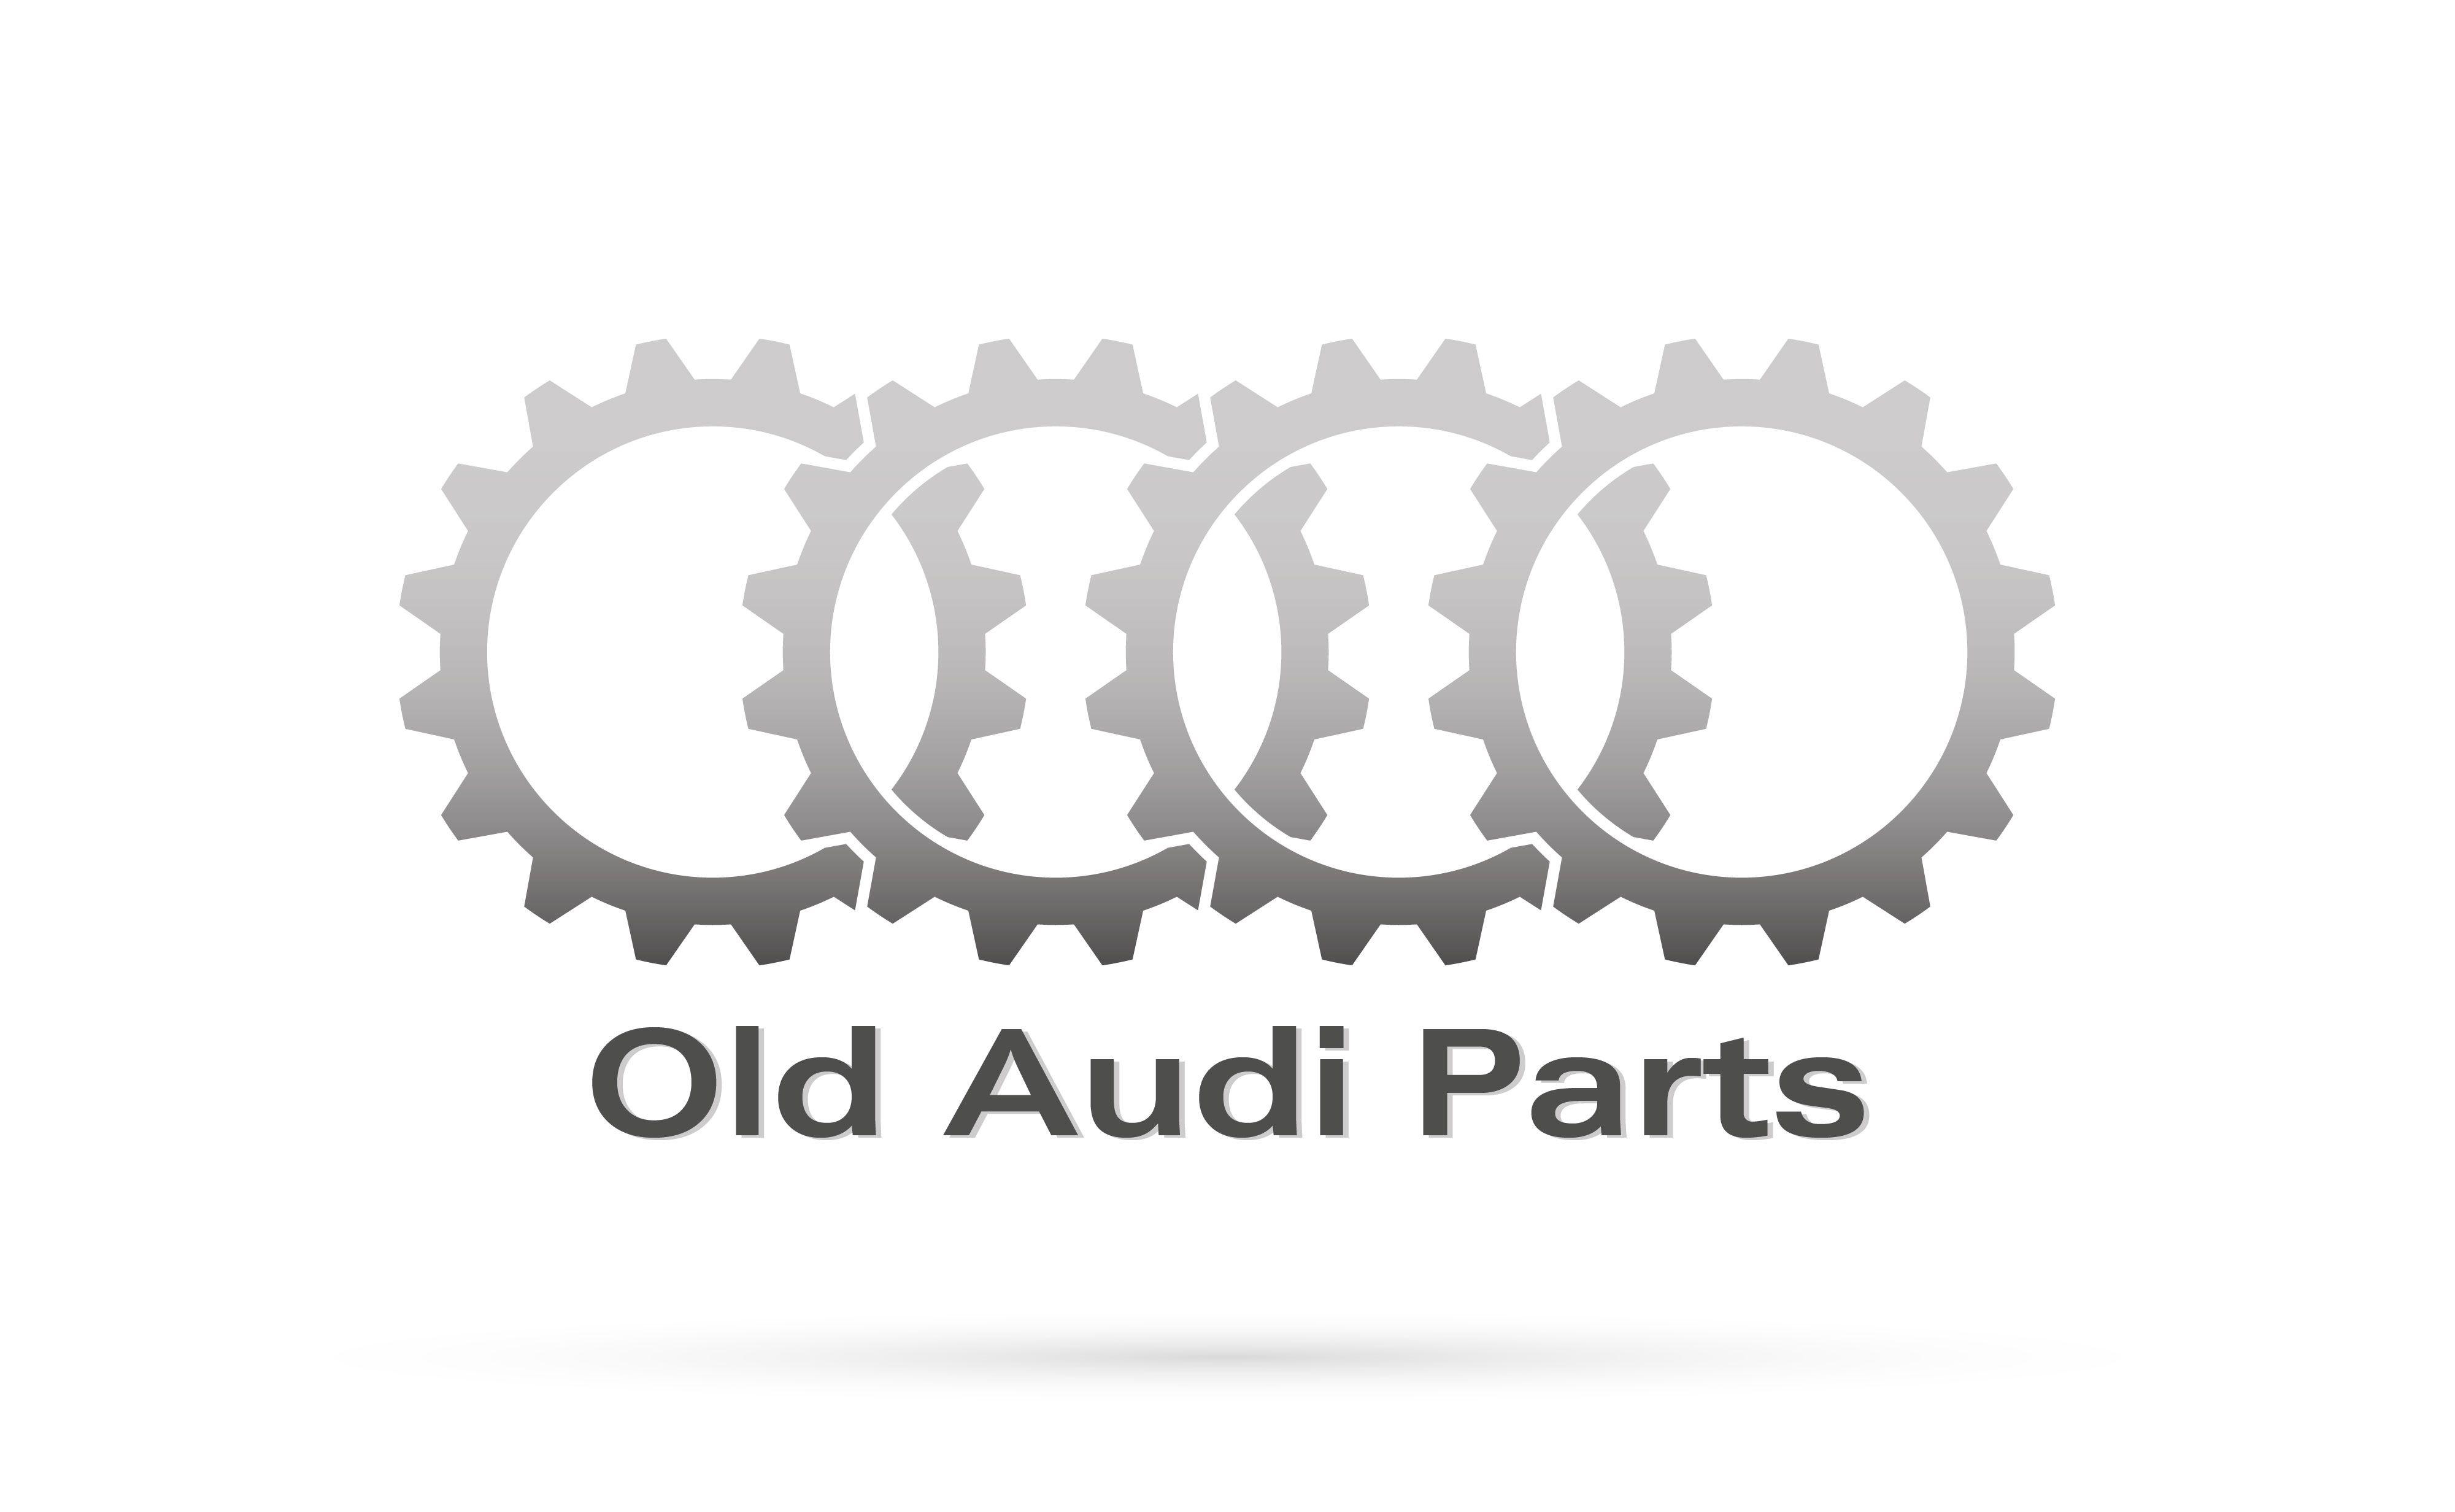 Old Audi Logo - old audi parts